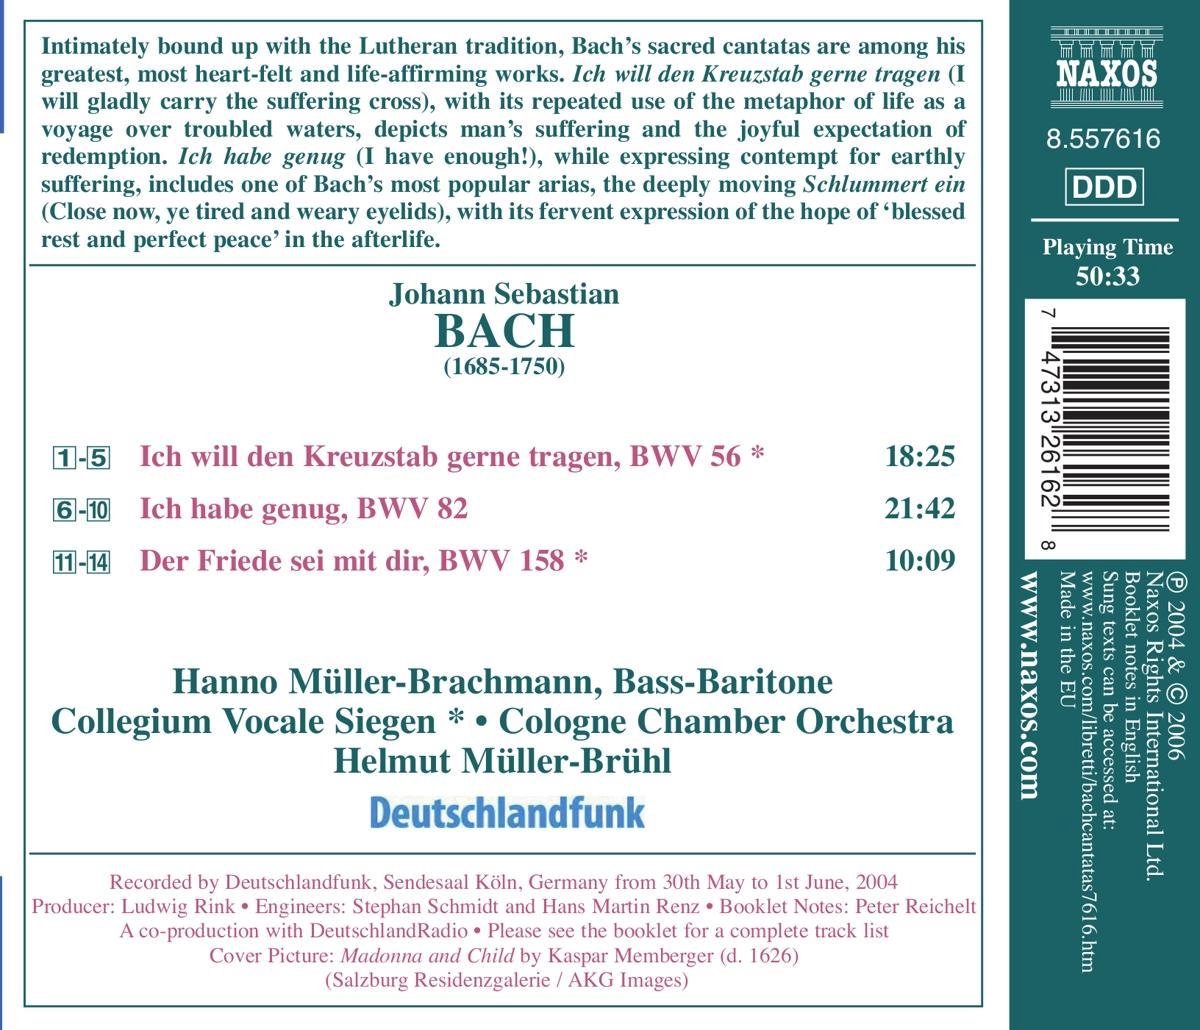 Hanno Muller-Brachmann 바흐: 베이스를 위한 칸타타들 (Bach: Sacred Cantatas for Bass Nos. 56, 82 & 158)